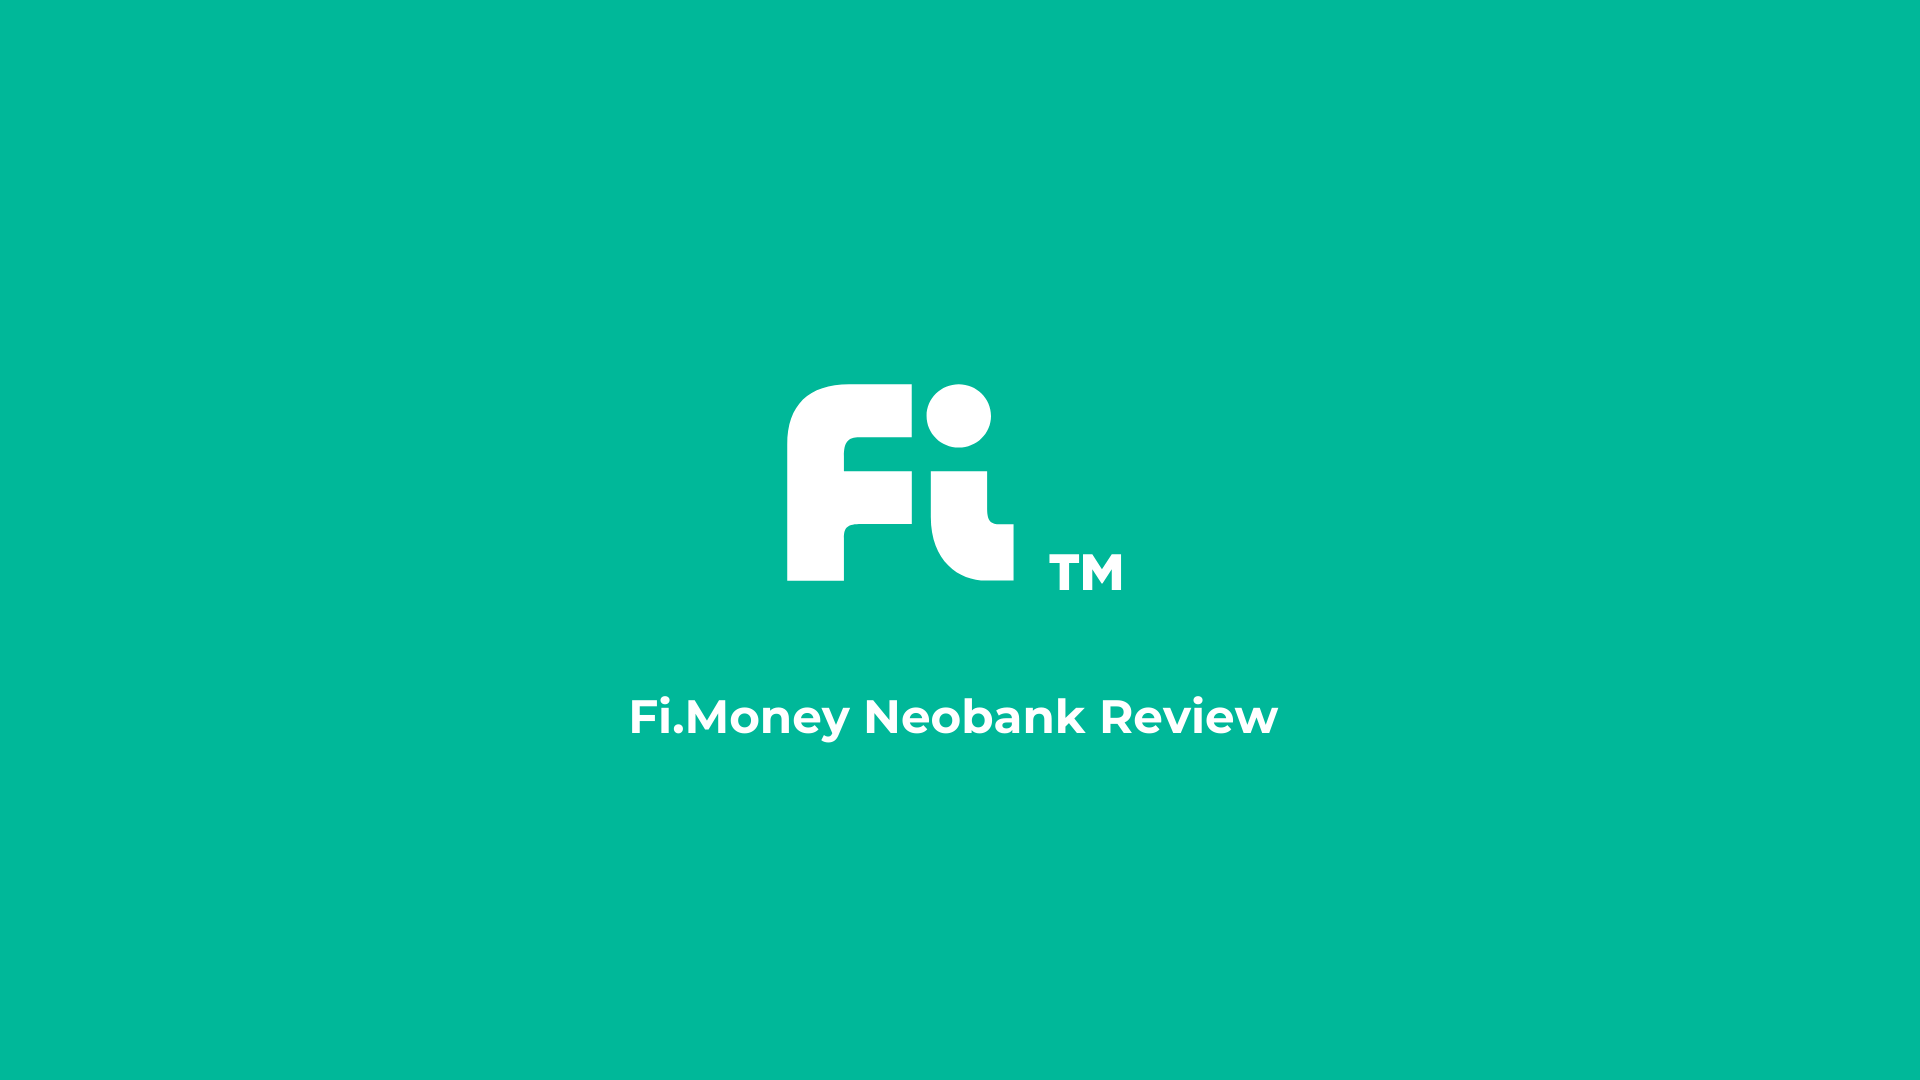 fi.money review - the best neobank in india? - aayush bhaskar